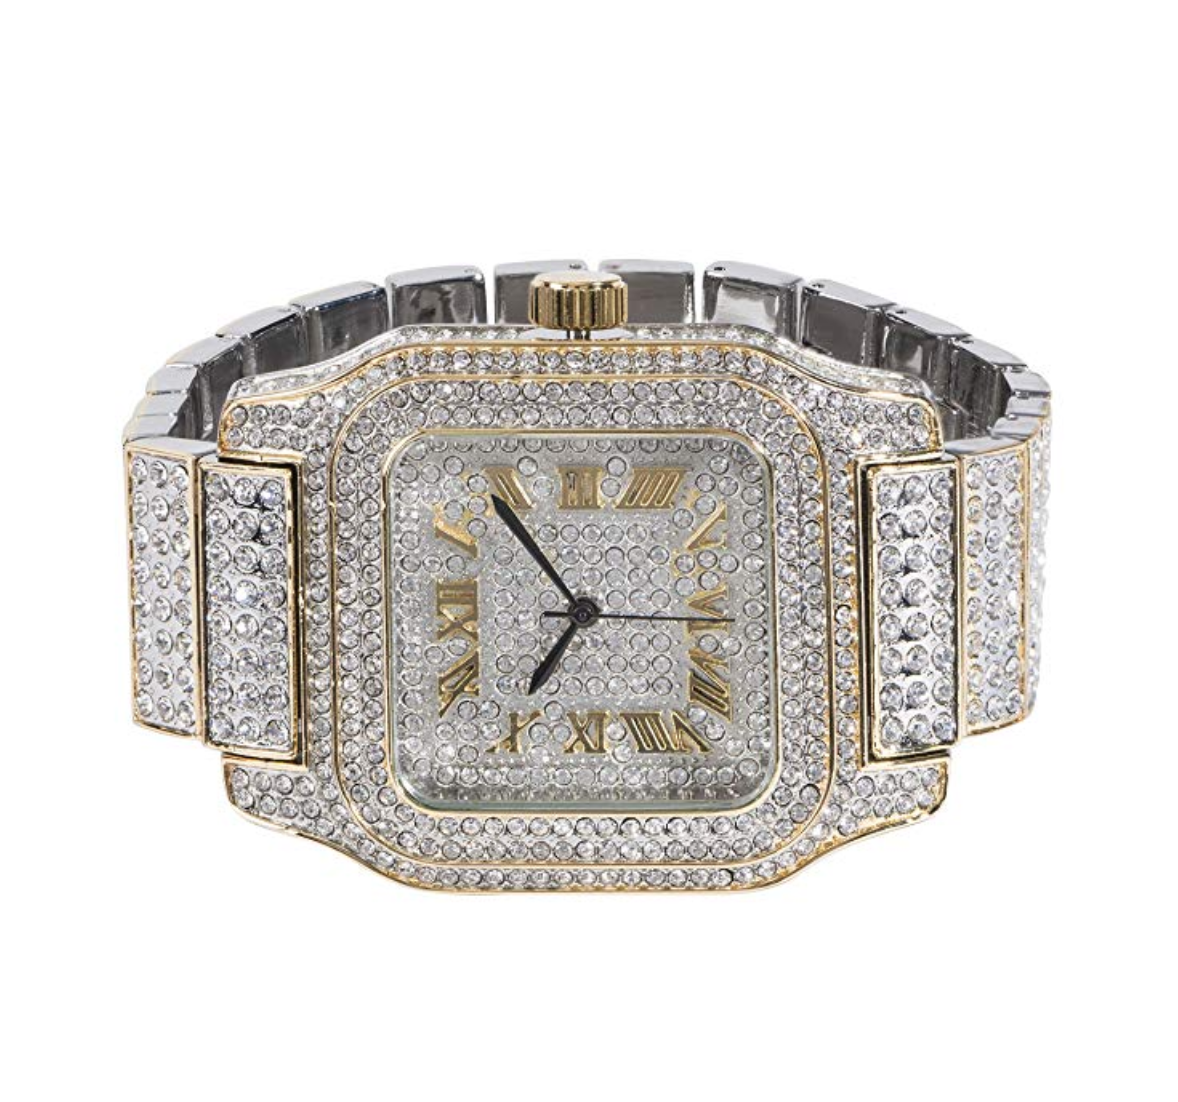 cartier watch with diamonds price